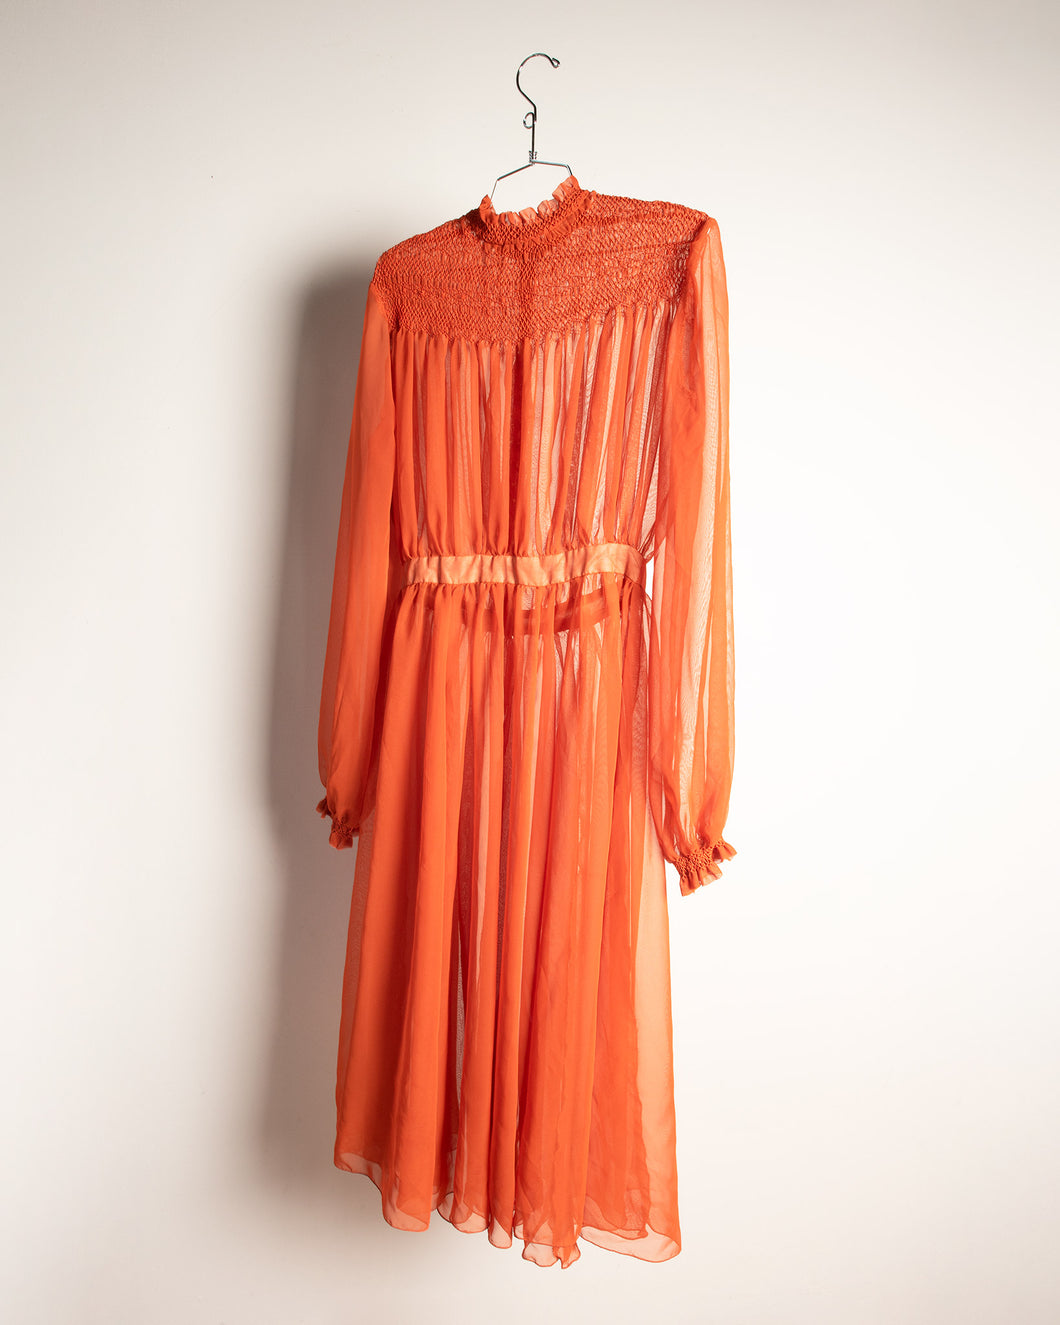 70s Orange Sheer Georgette Smocked dress